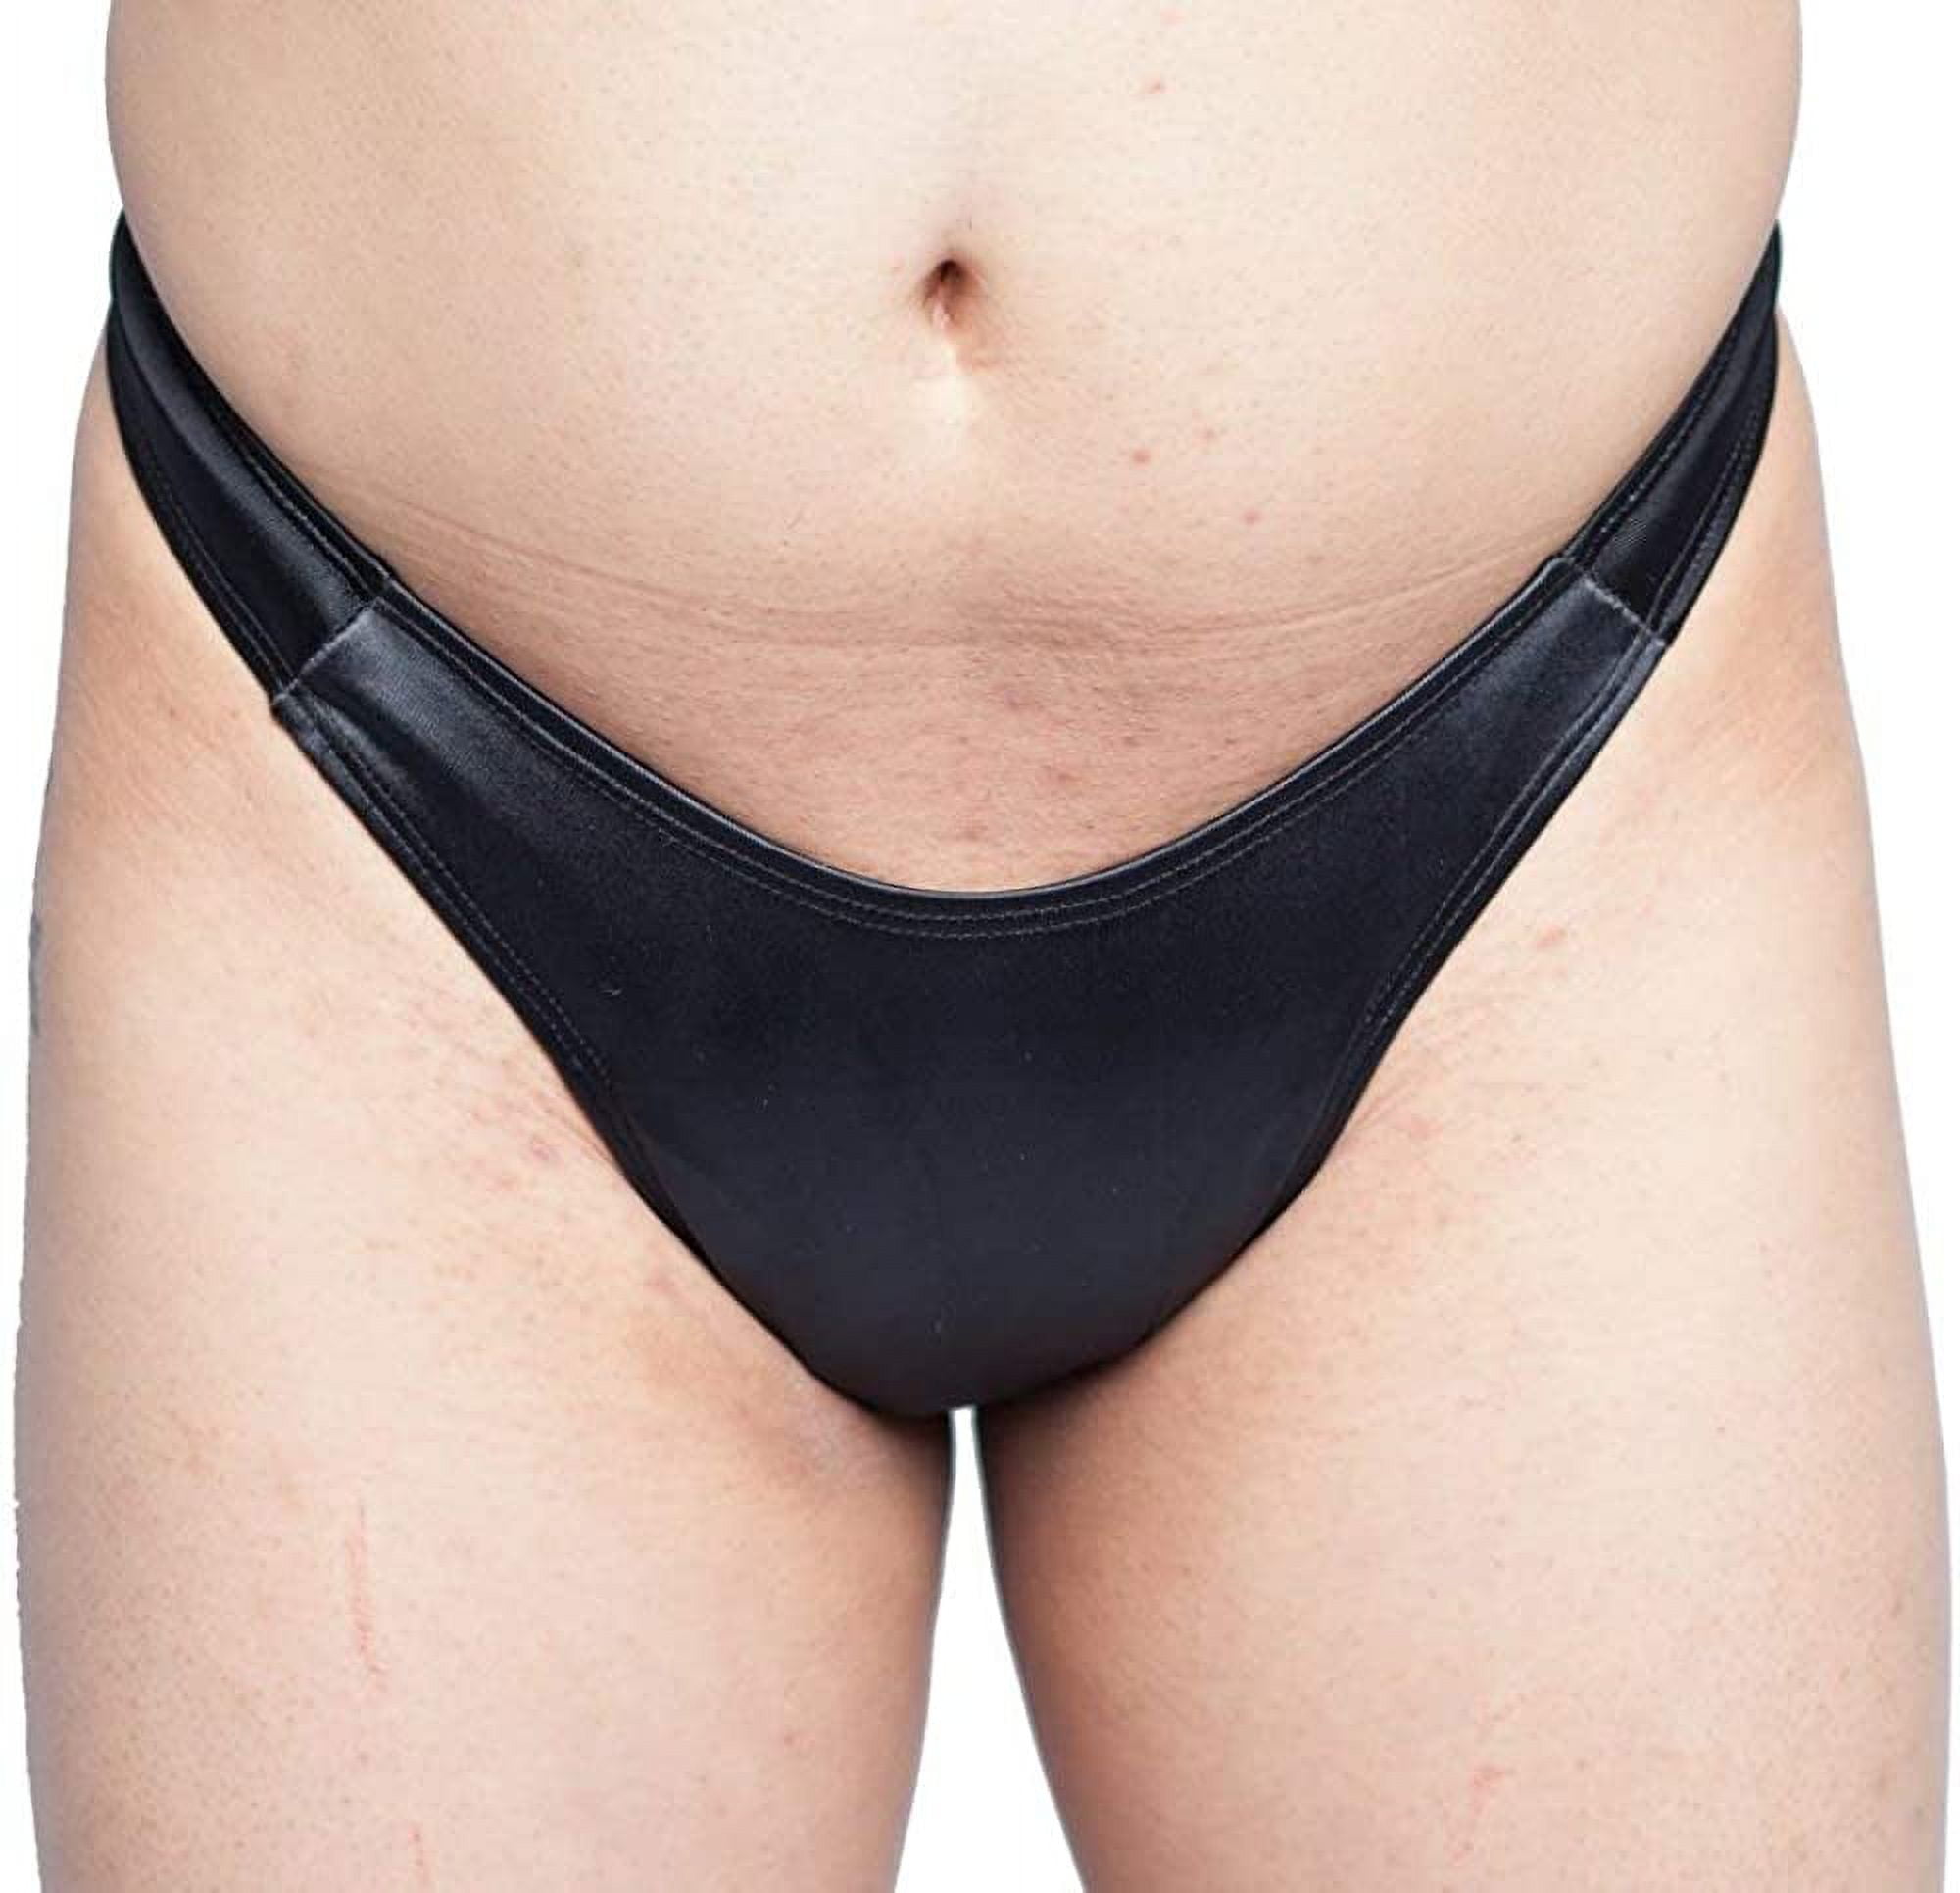 Tucking Gaff Panties For Crossdressing Men and Trans-Women, Thong-Style  Black Size XS